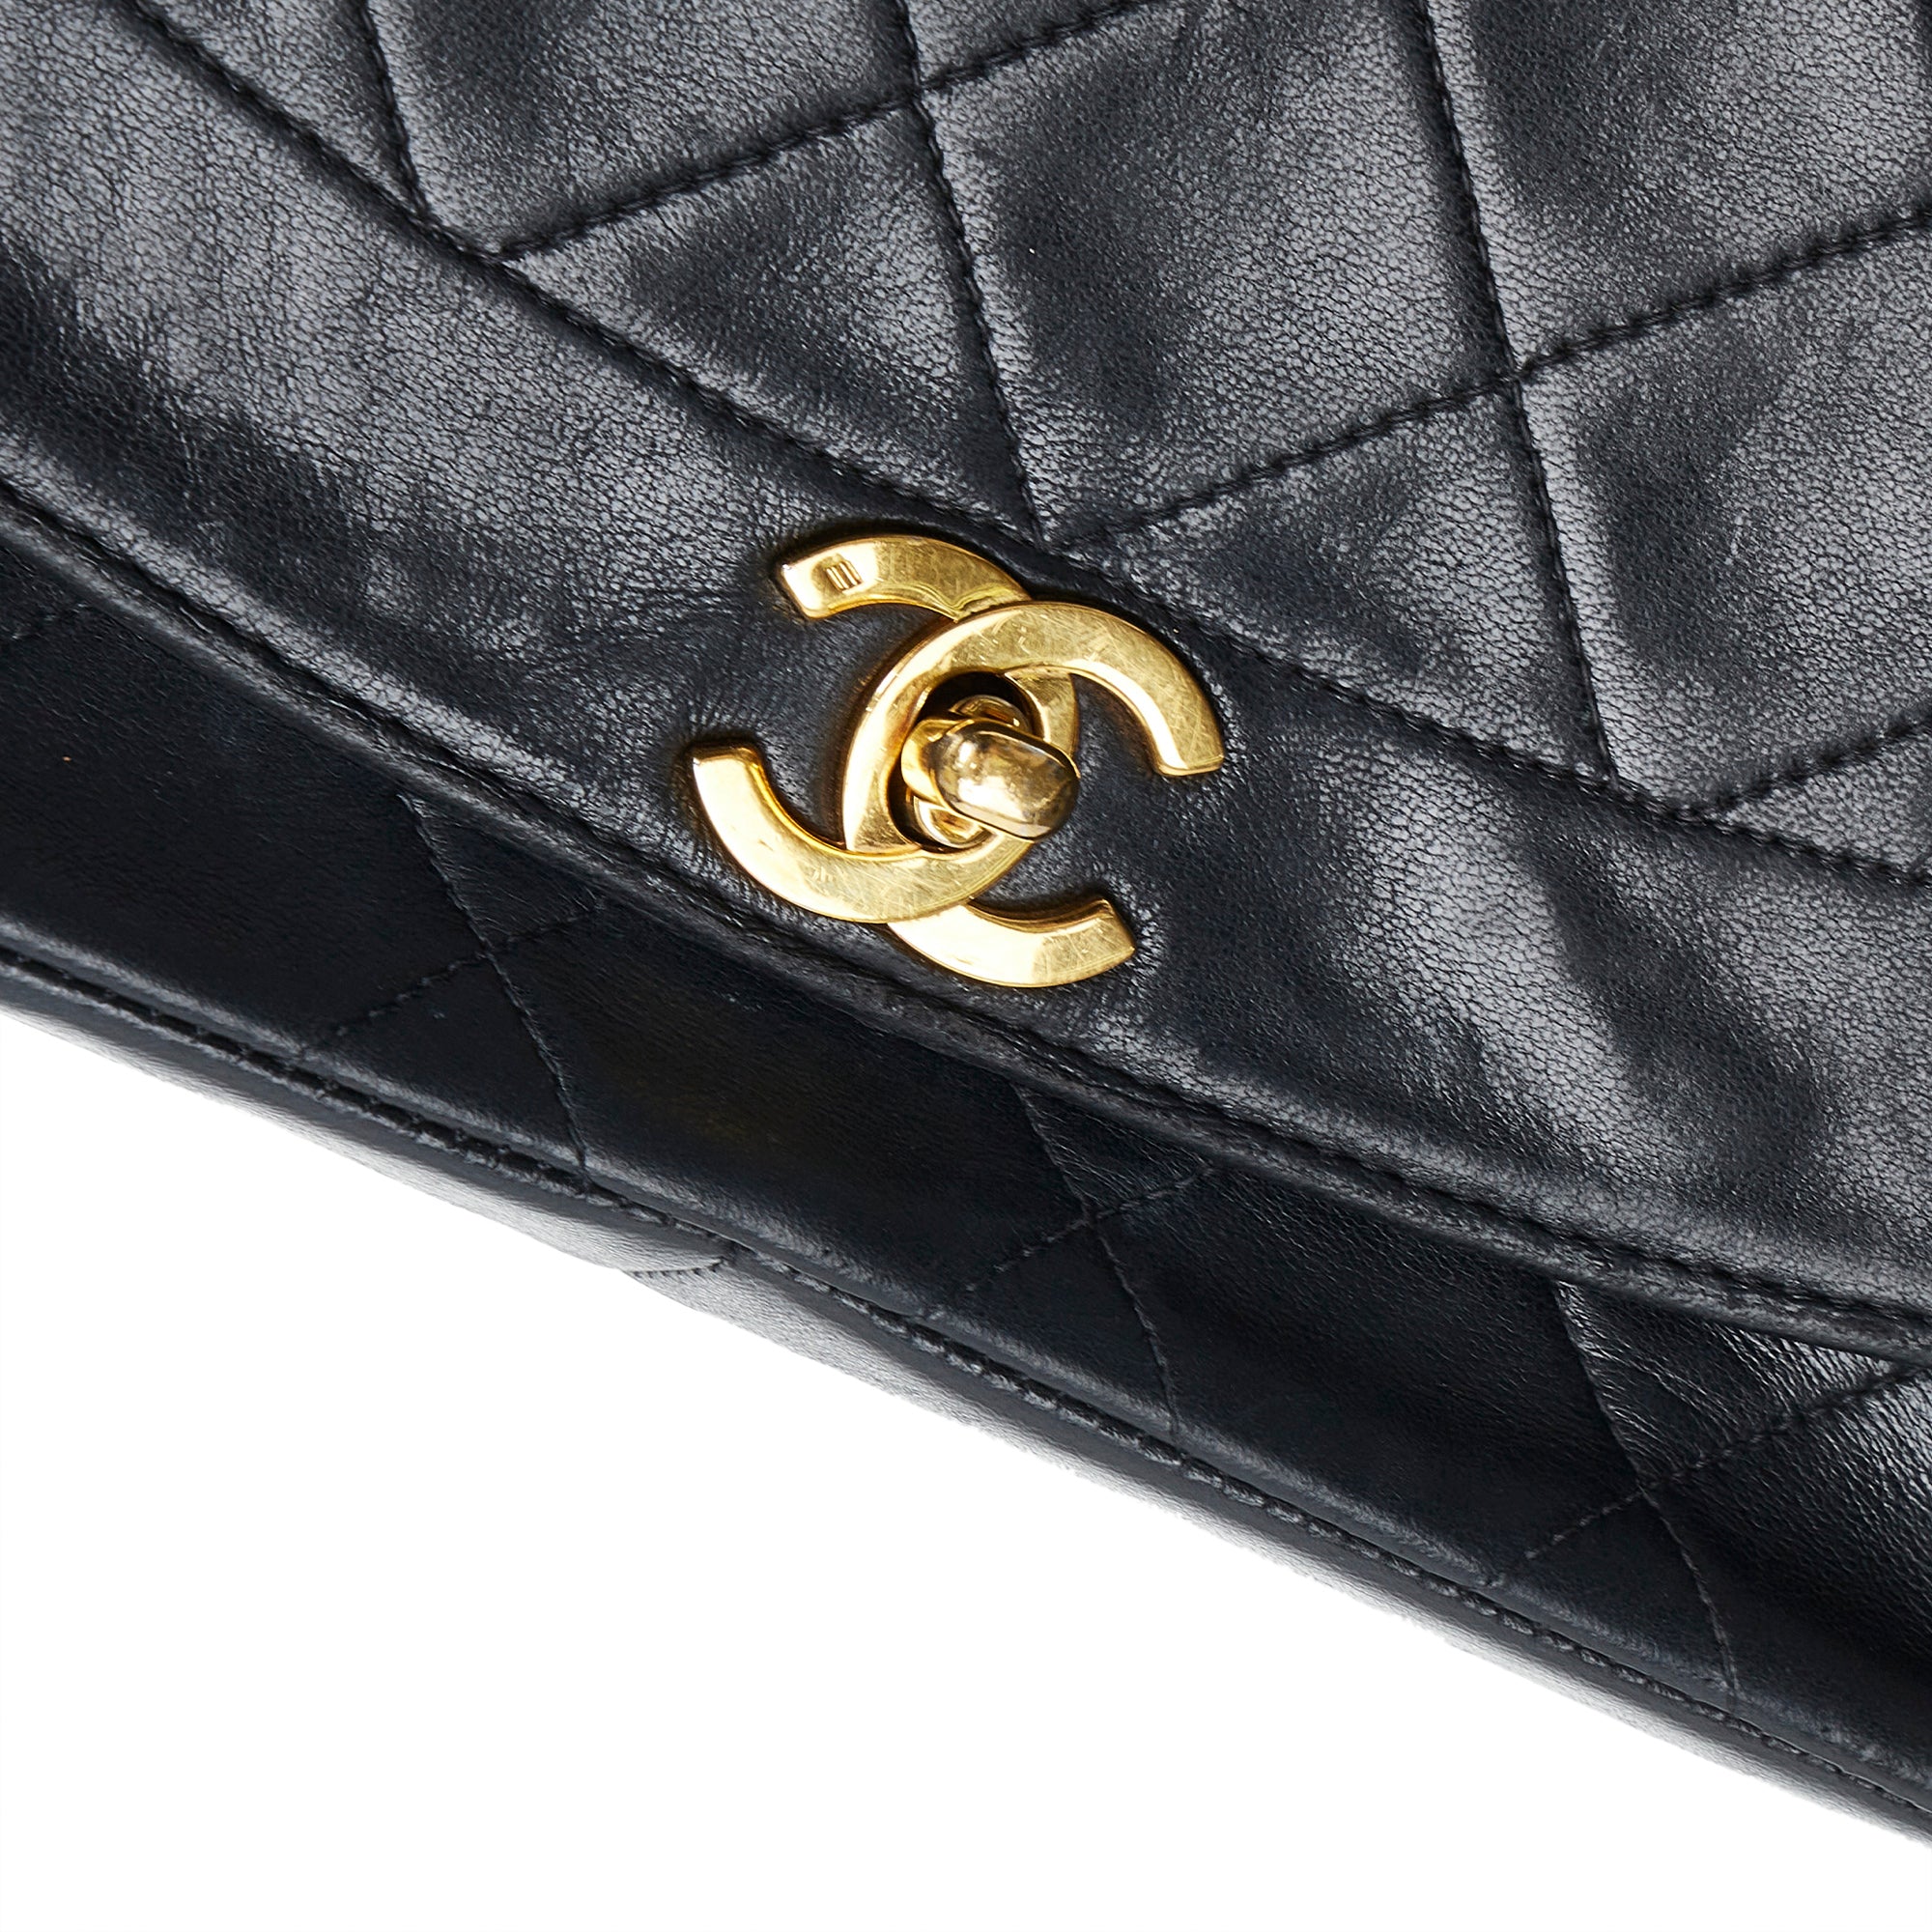 chanel jumbo flap handbag black